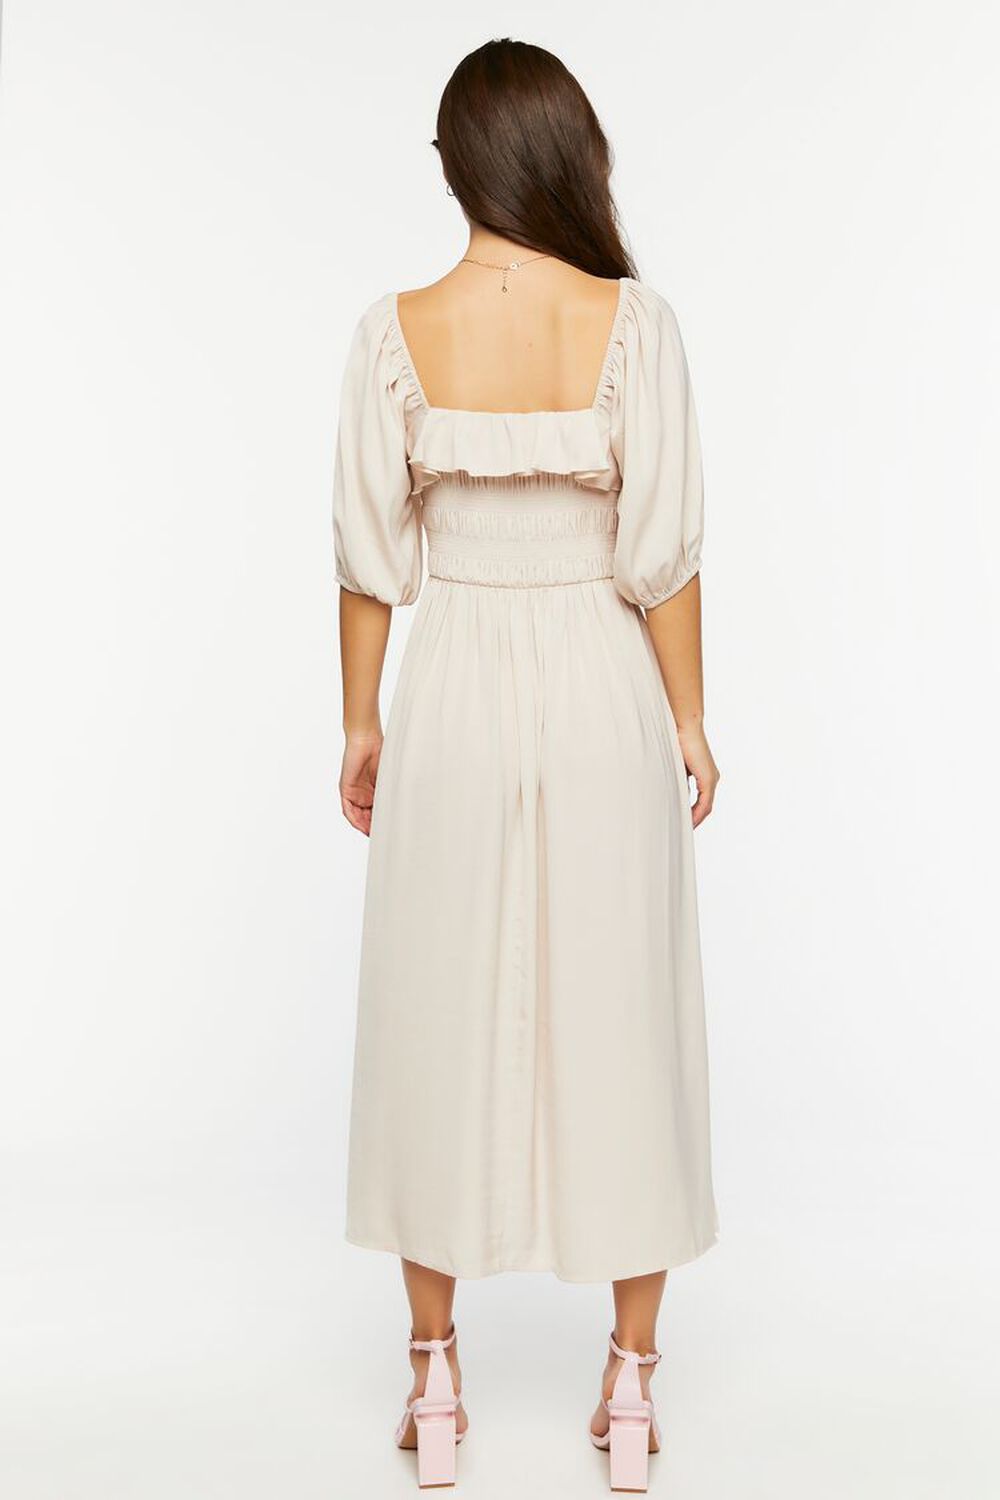 TAUPE Shirred Puff-Sleeve Midi Dress, image 3